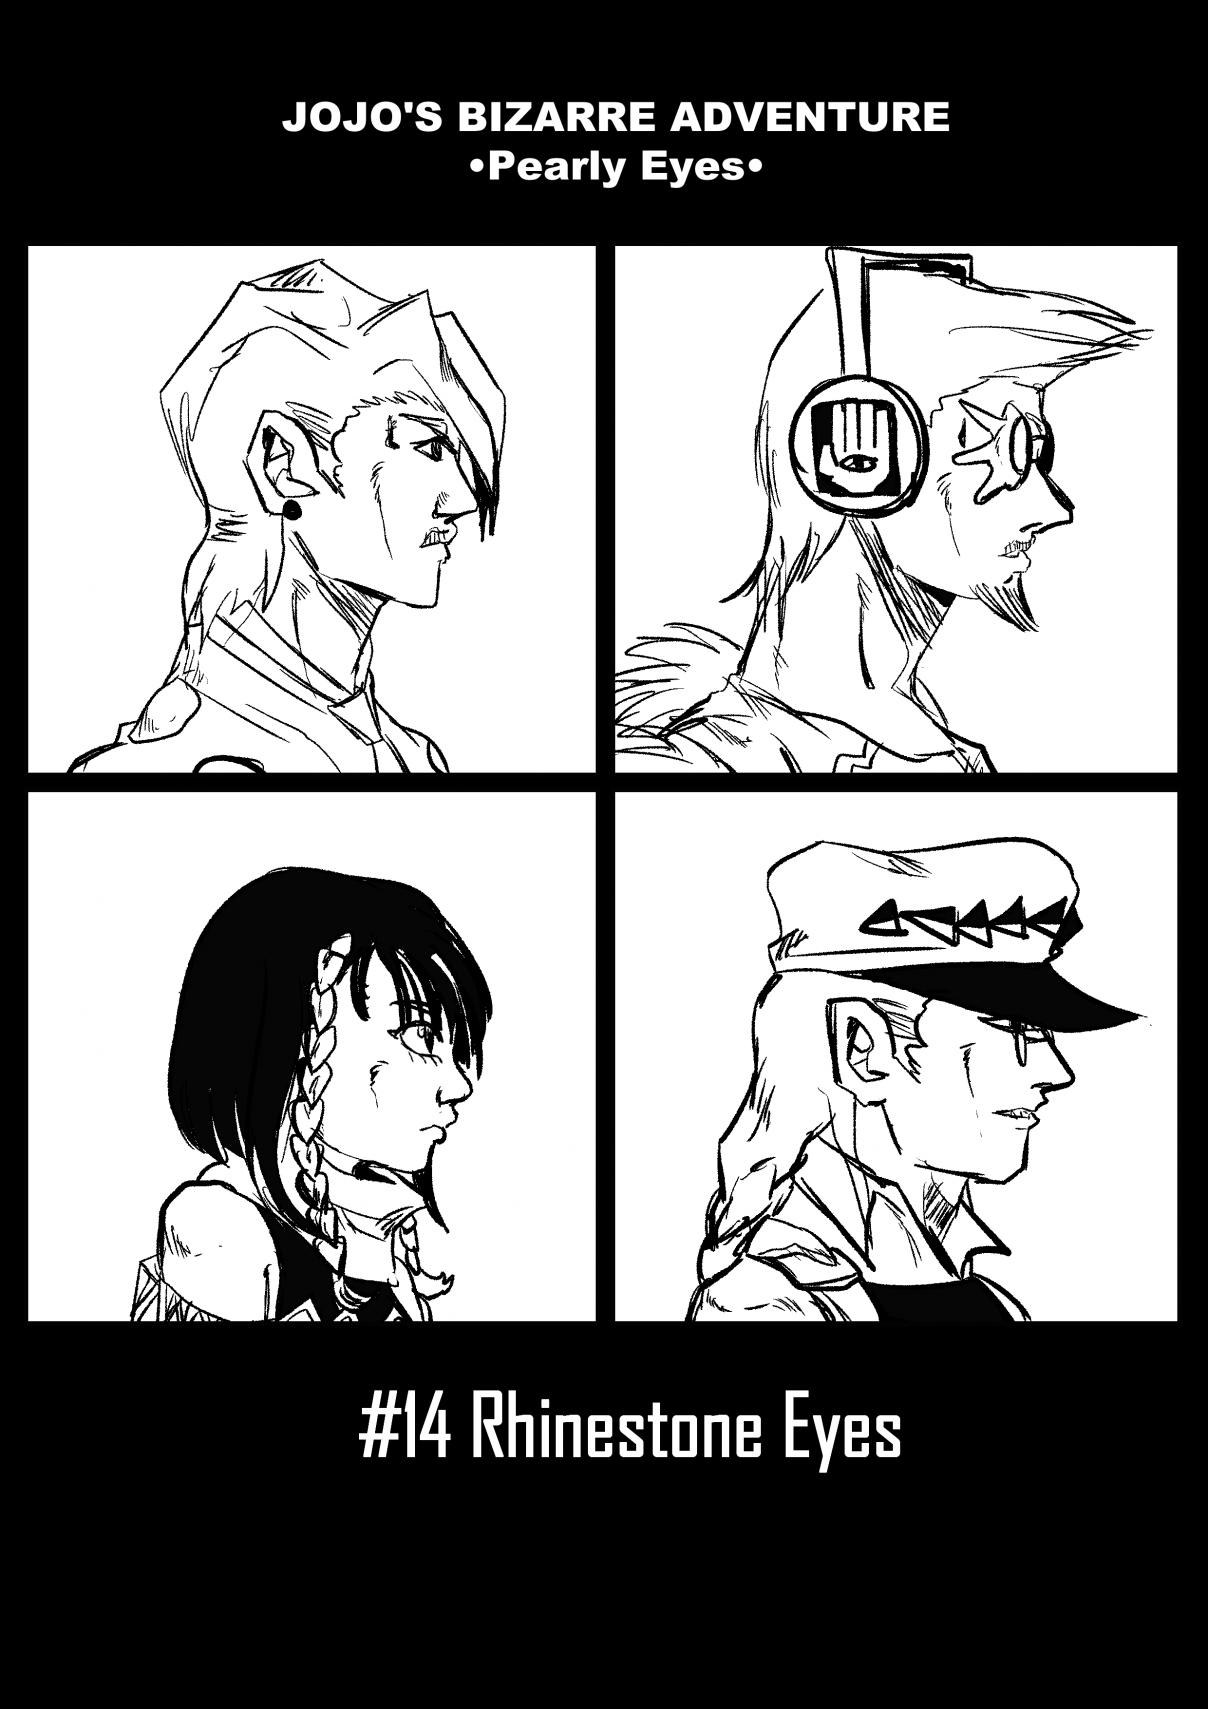 JoJo's Bizarre Adventure Pearly Eyes Vol. 2 Ch. 14 Rhinestone Eyese